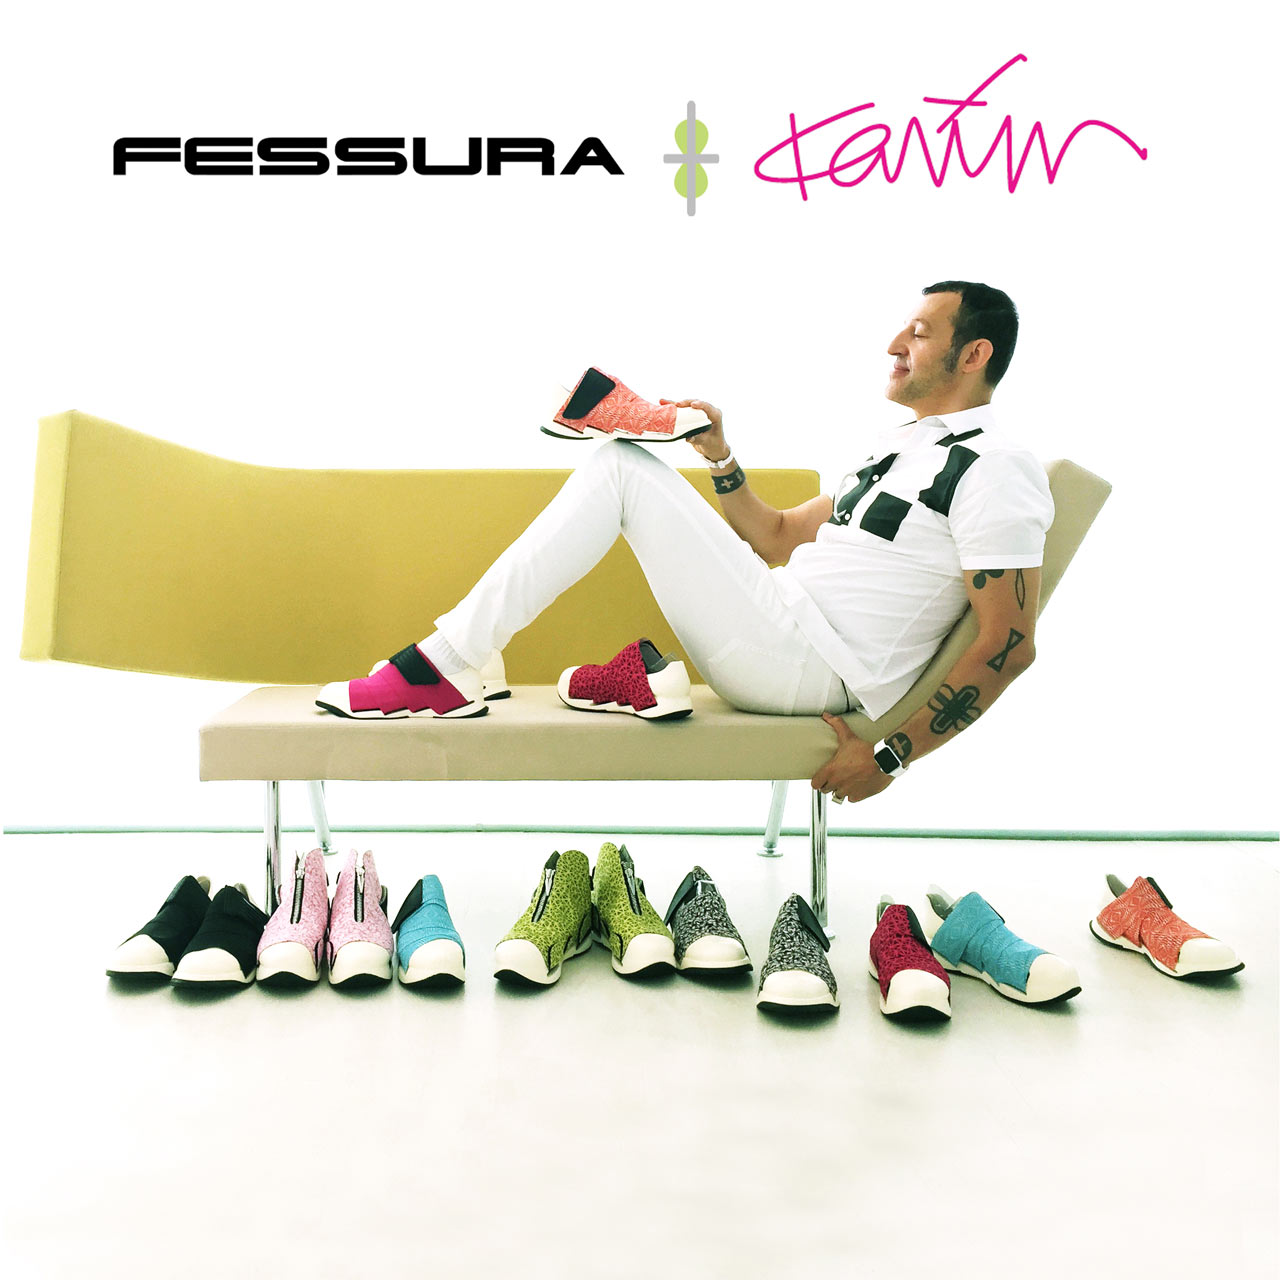 FESSURA Launches Limited Edition Sneakers by Karim Rashid